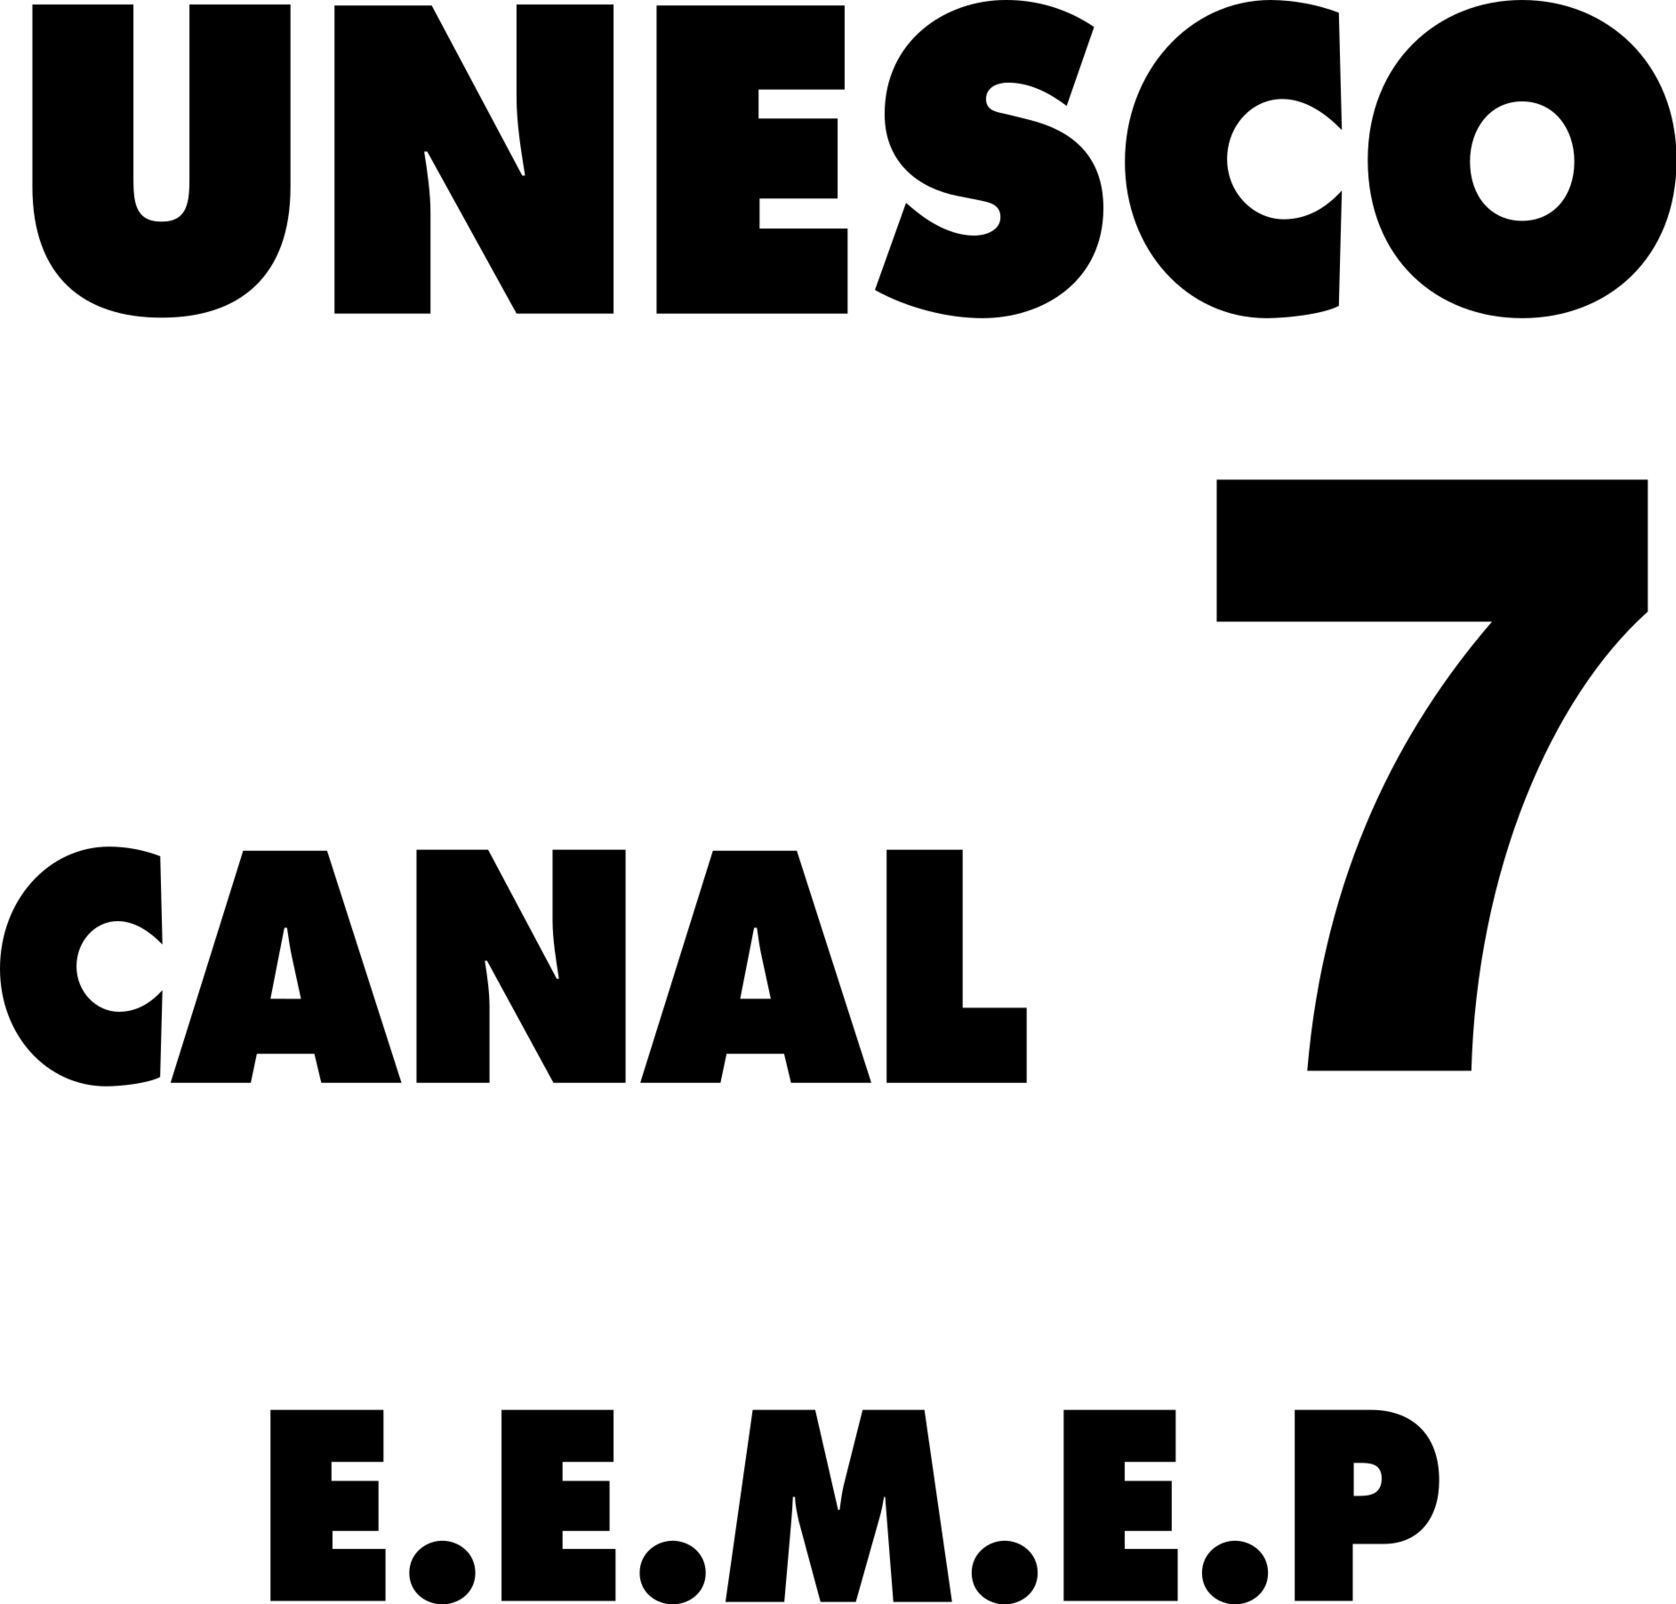 File:UNESCO logo white.png - Wikimedia Commons